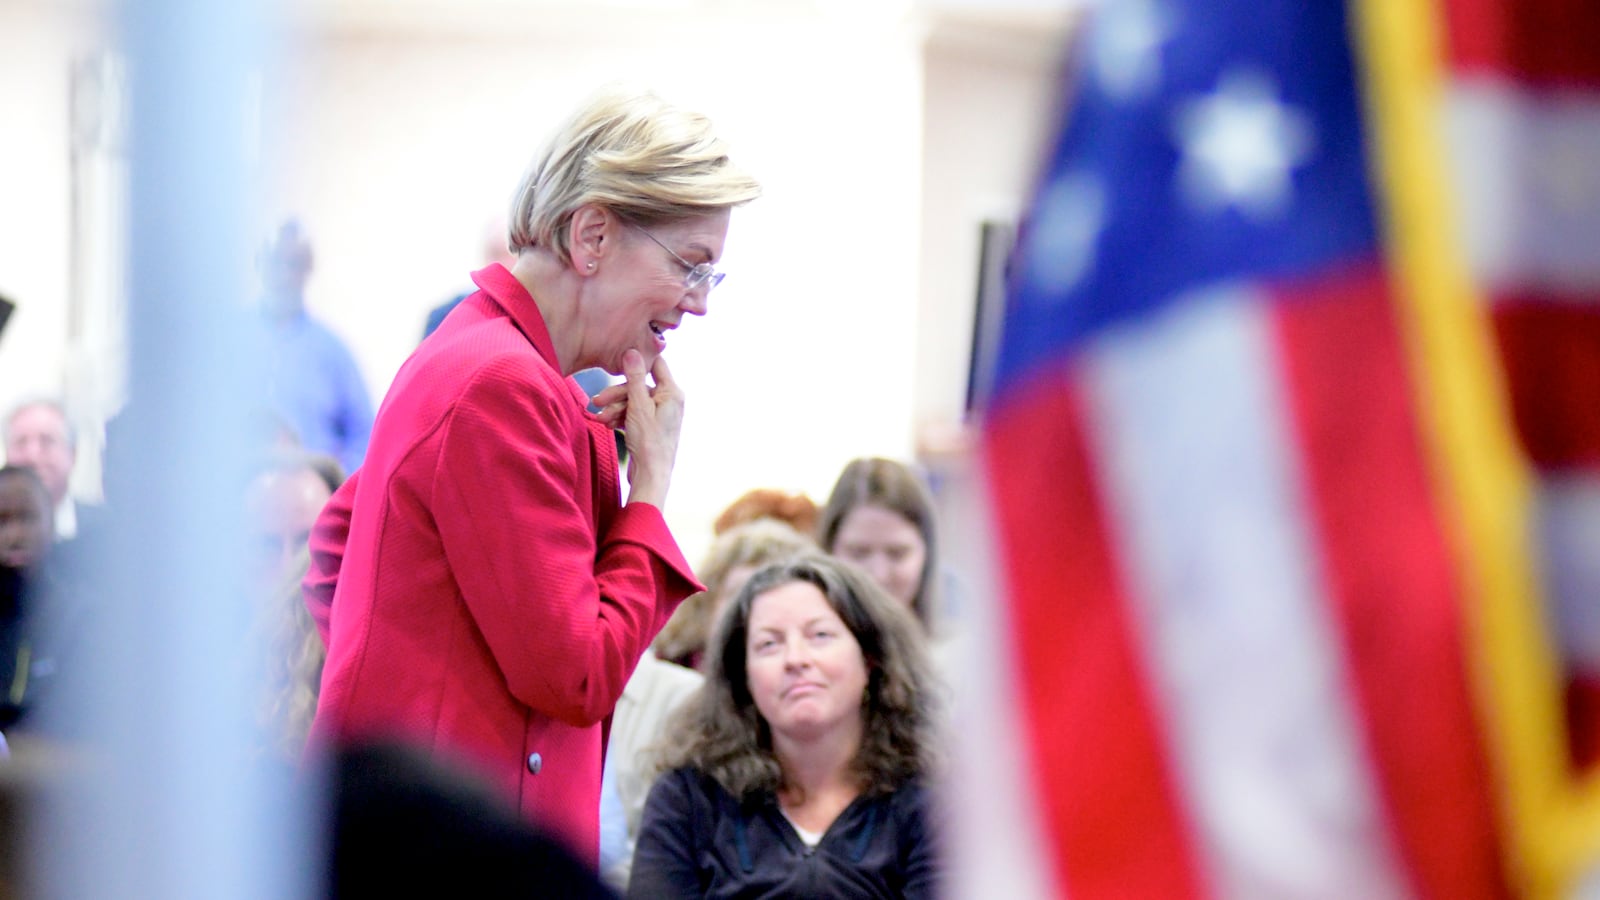 Sen. Elizabeth Warren speaks at a town hall with members of the American Federation of Teachers in Philadelphia in May 2019.